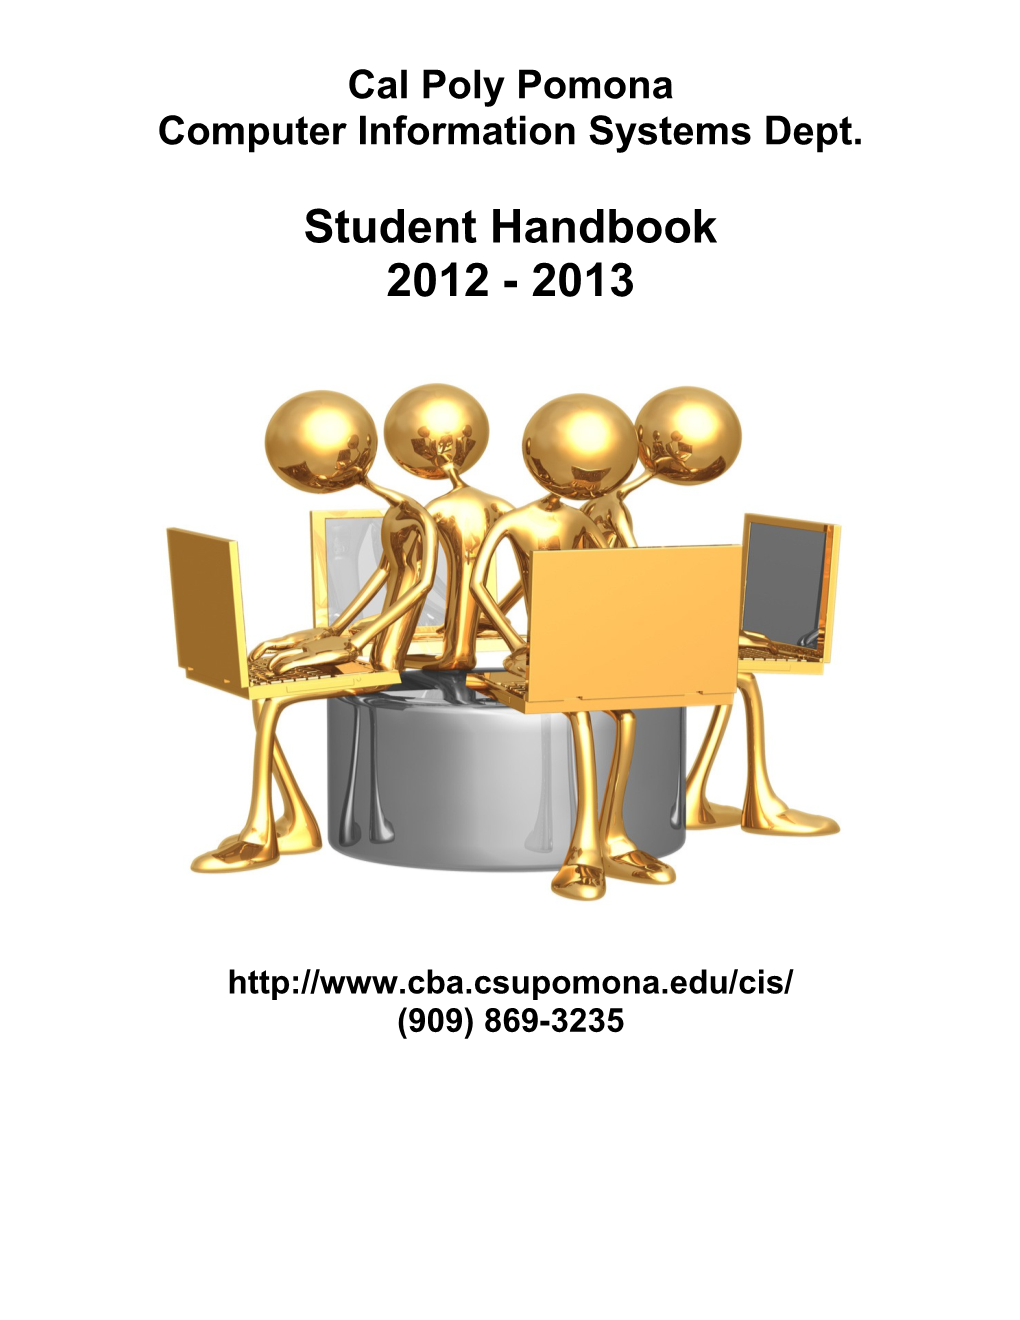 Computer Information Systems Advising Handbook, 2012-2013 Page 1